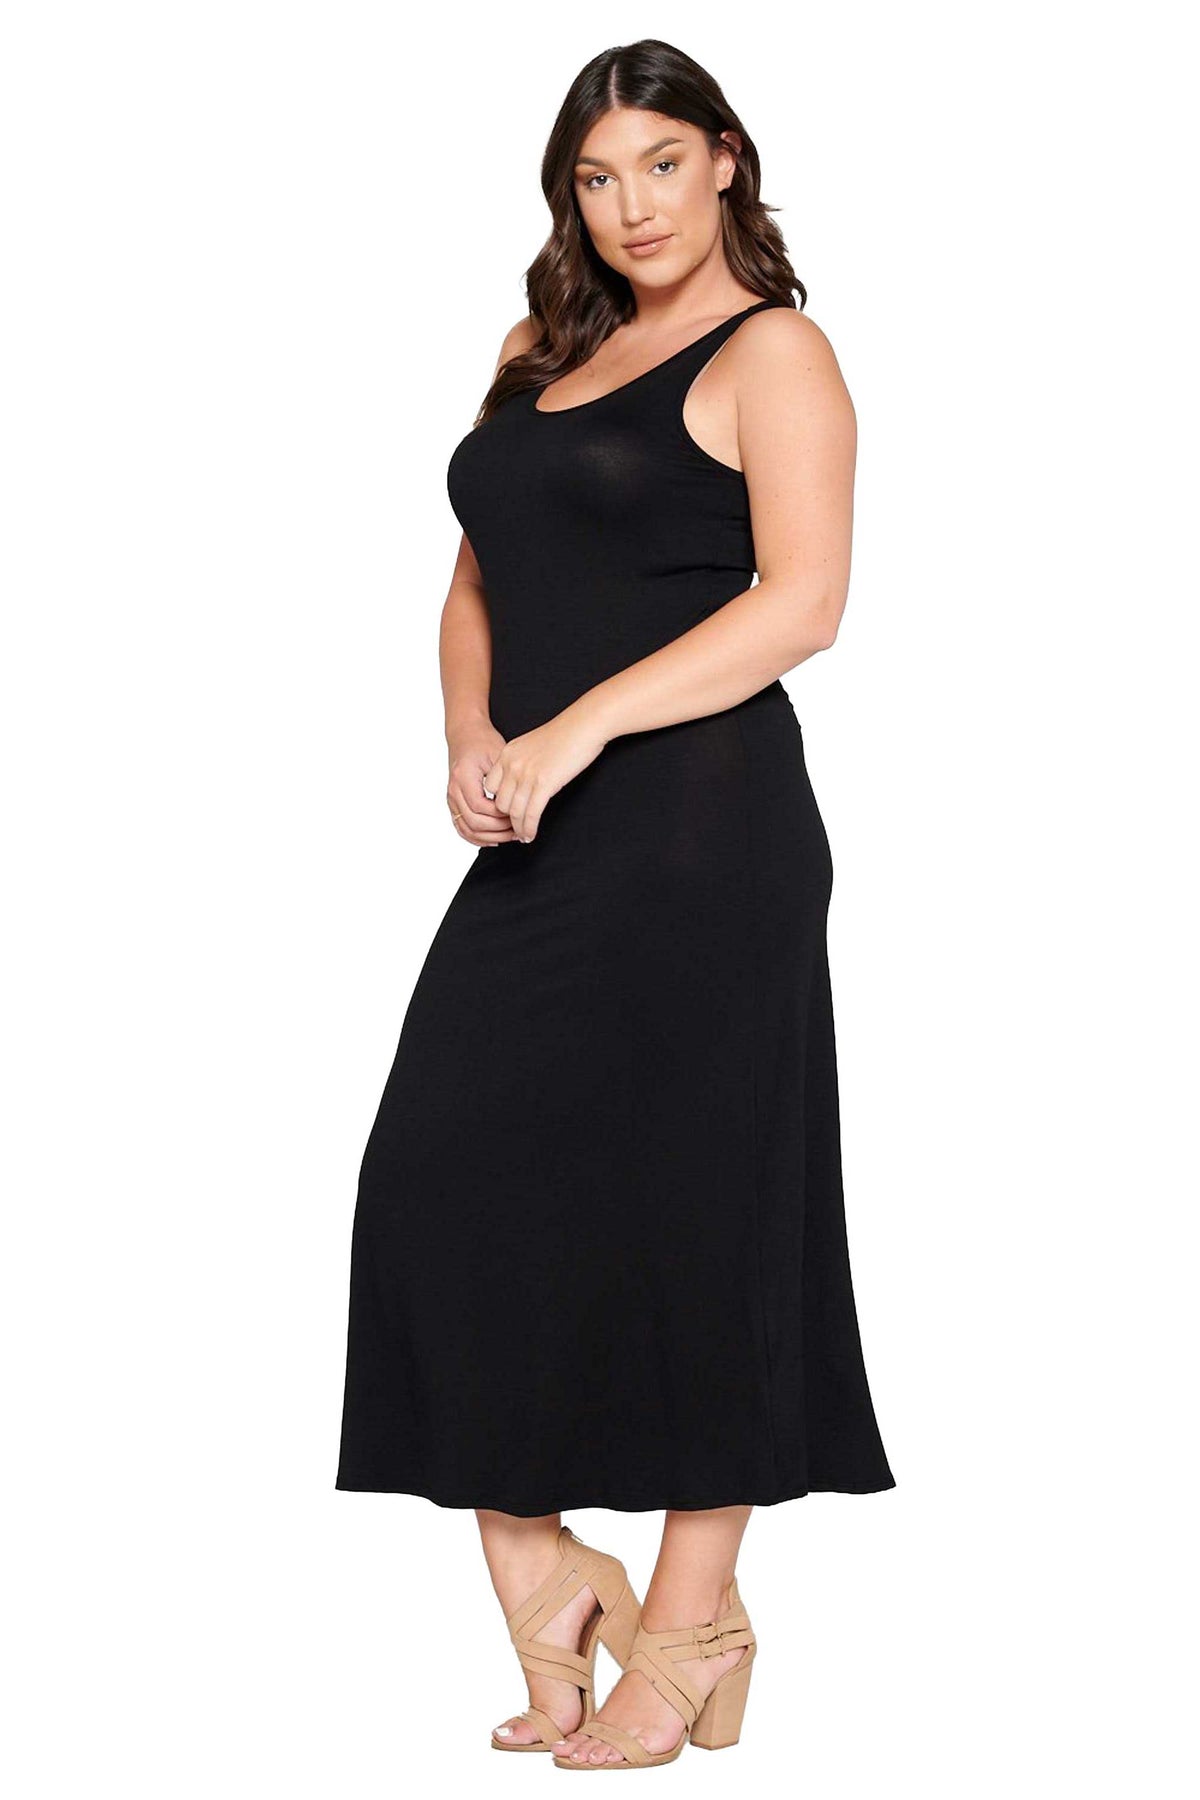 livd L I V D women's trendy contemporary plus size tank sleeveless bodycon midi dress in  black